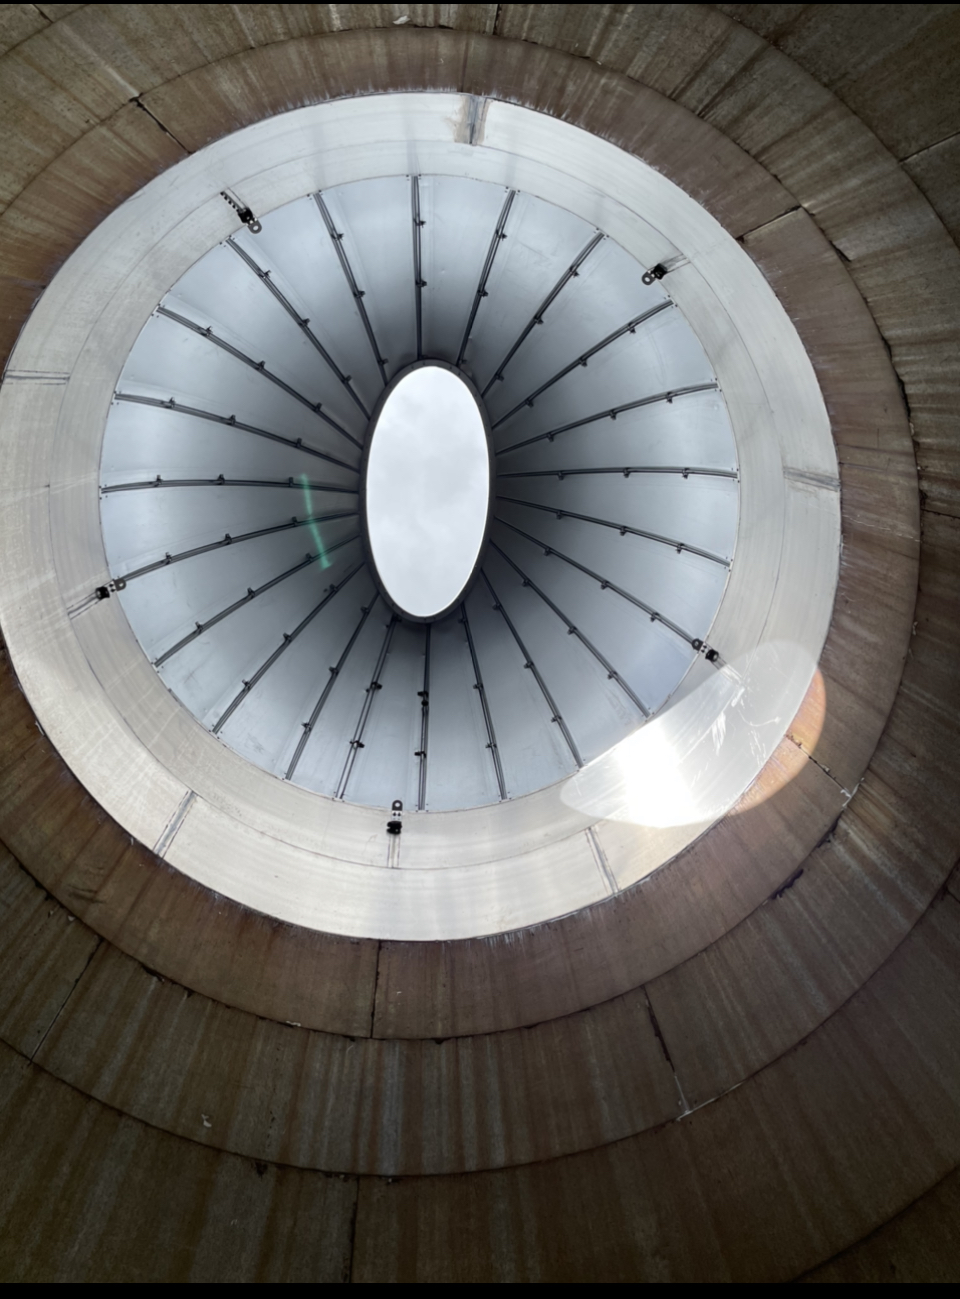 Inside a grain silo looking up, it looks like an eye looking back at me